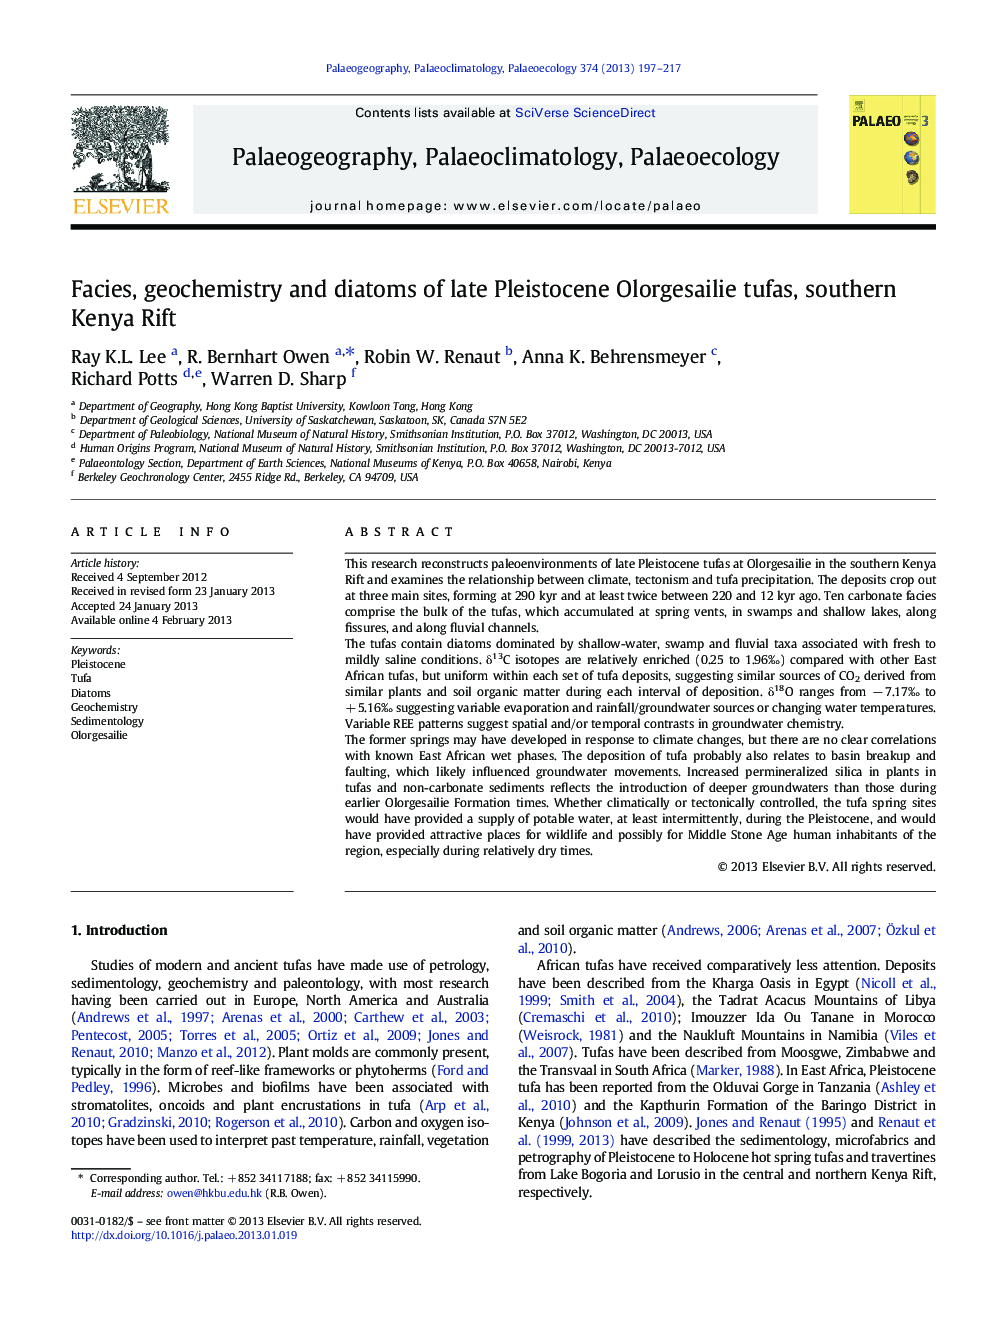 Facies, geochemistry and diatoms of late Pleistocene Olorgesailie tufas, southern Kenya Rift